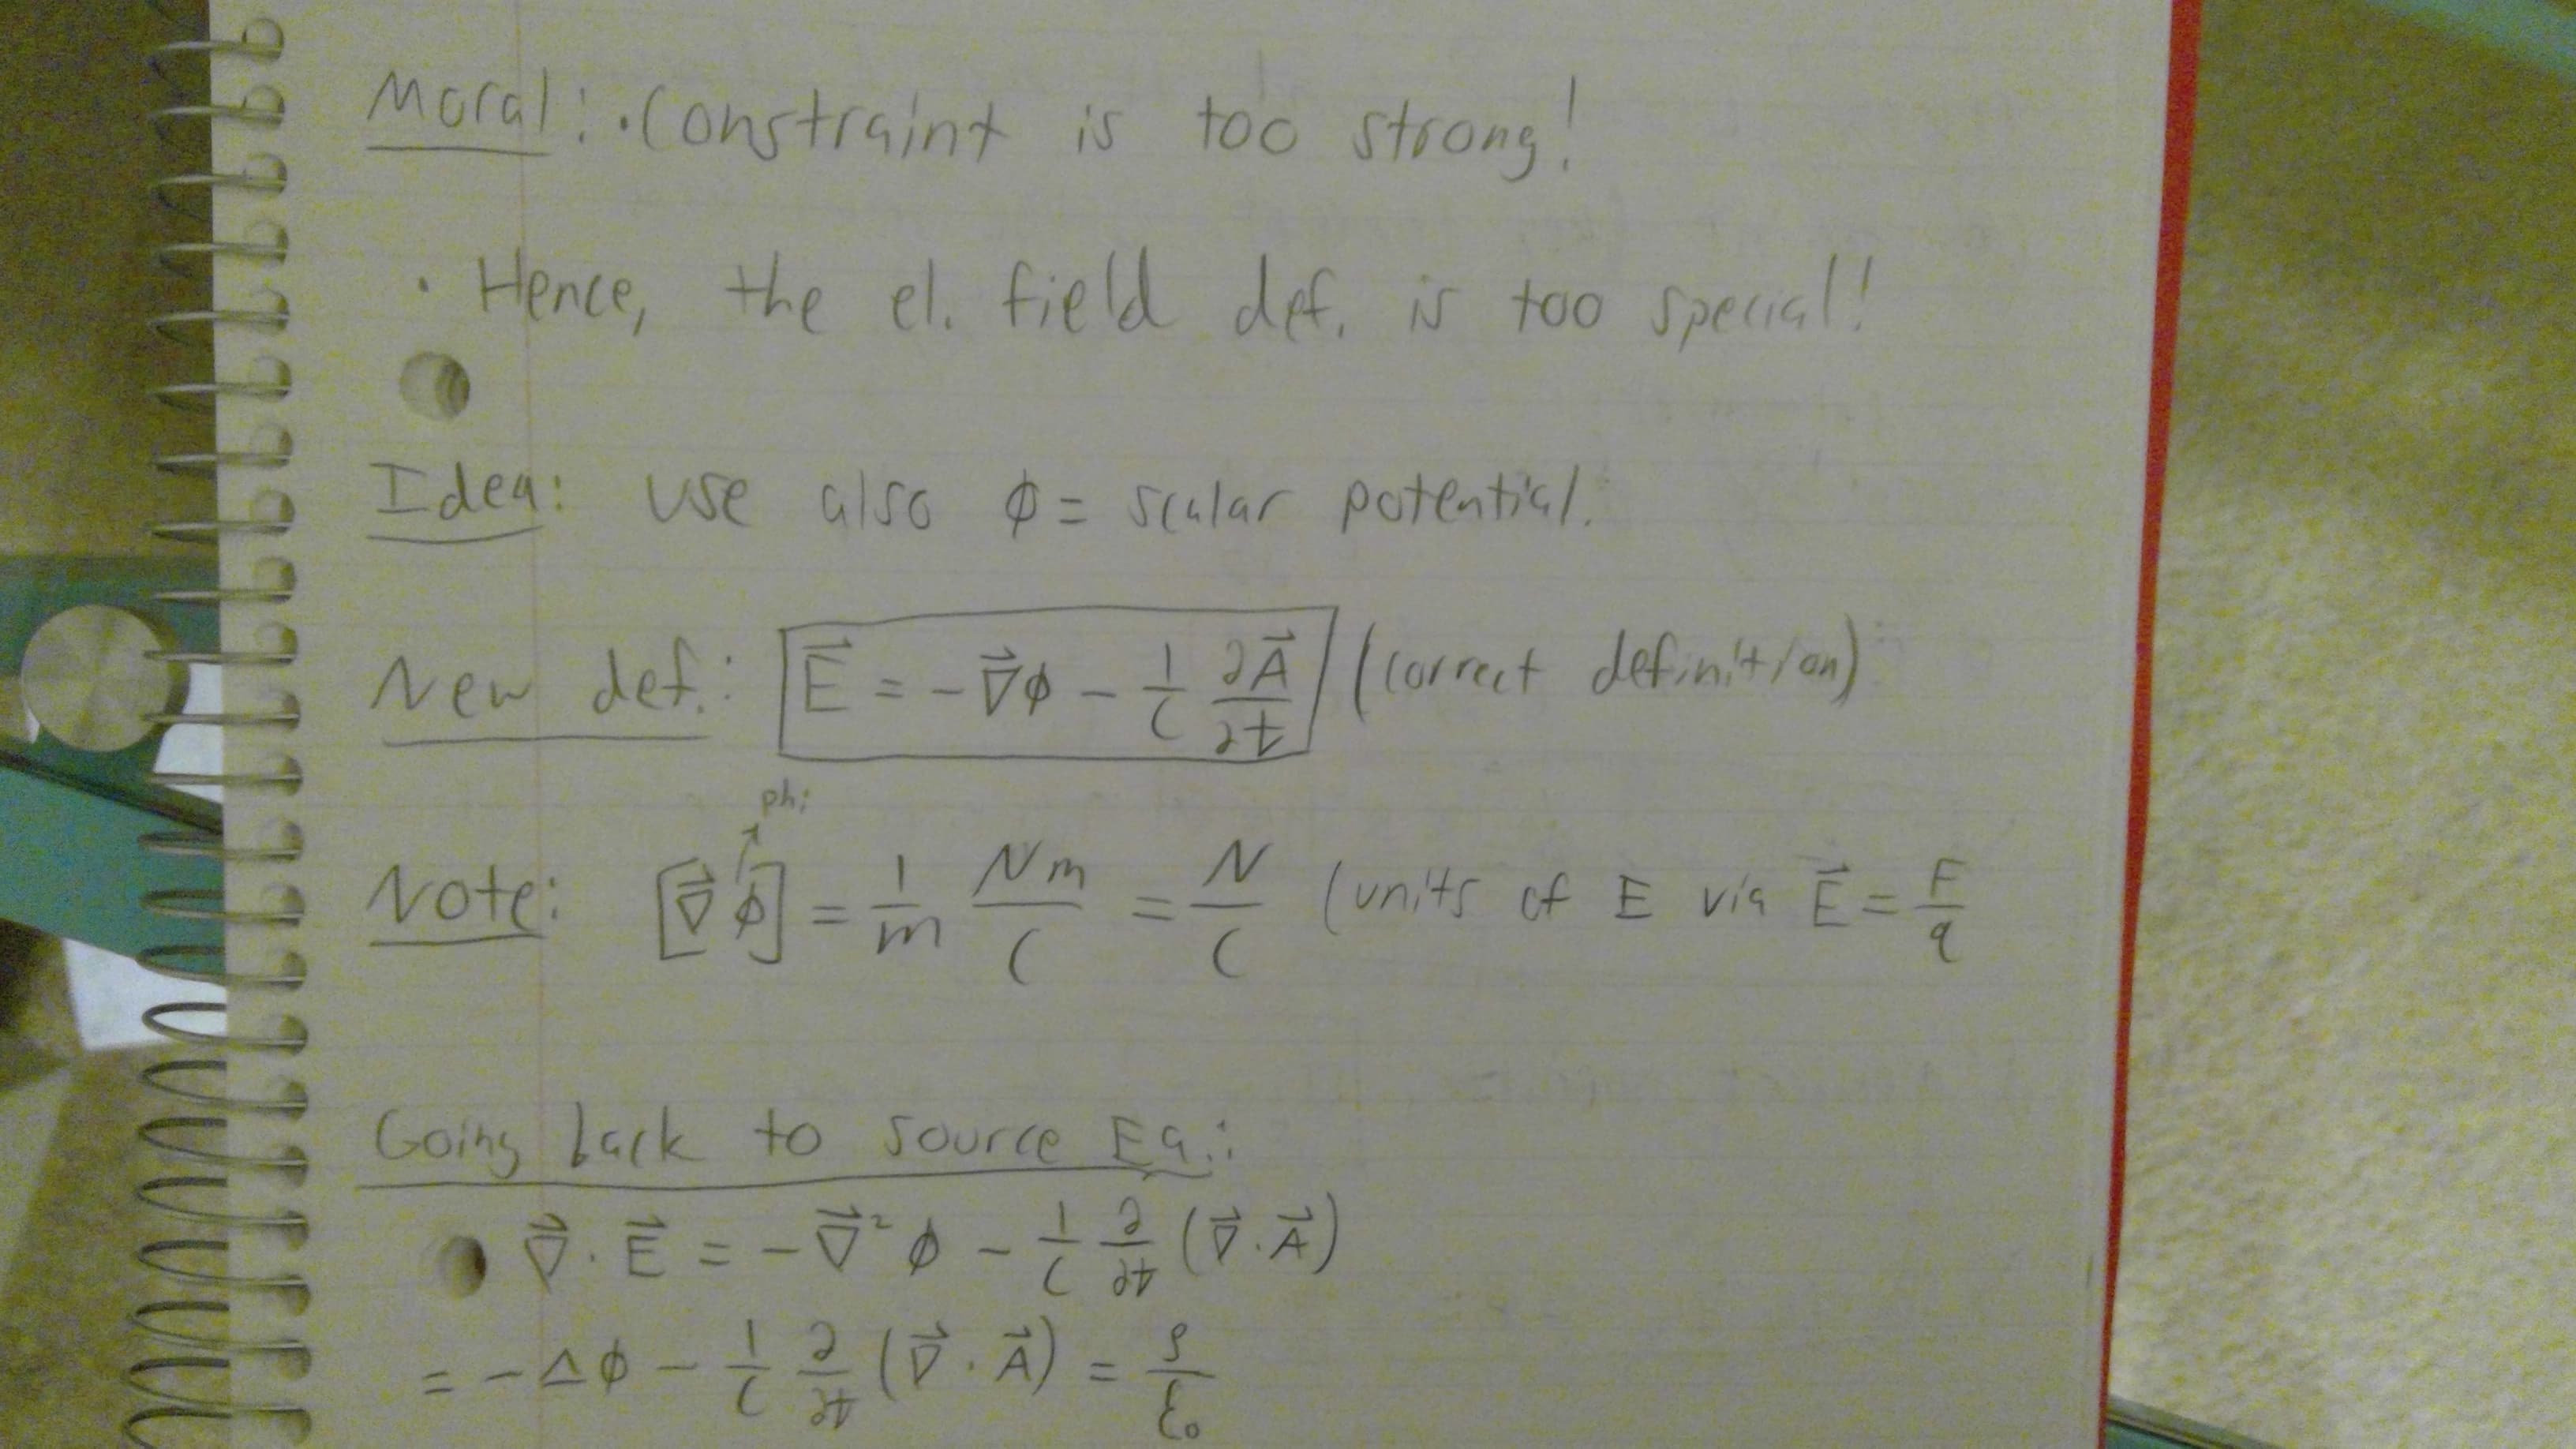 MoralConstraint is too strong
Hente, the el. field de. is too Special
Idea: use alro Salar Potent/
A(oret defin/n)
C det E-- 2(nt dein/x)
ph:
-N
Note:
units of E vi E-F
Goins lark to source E
-2 (7)
E-
: -스0 - 는을 (7.지) -
